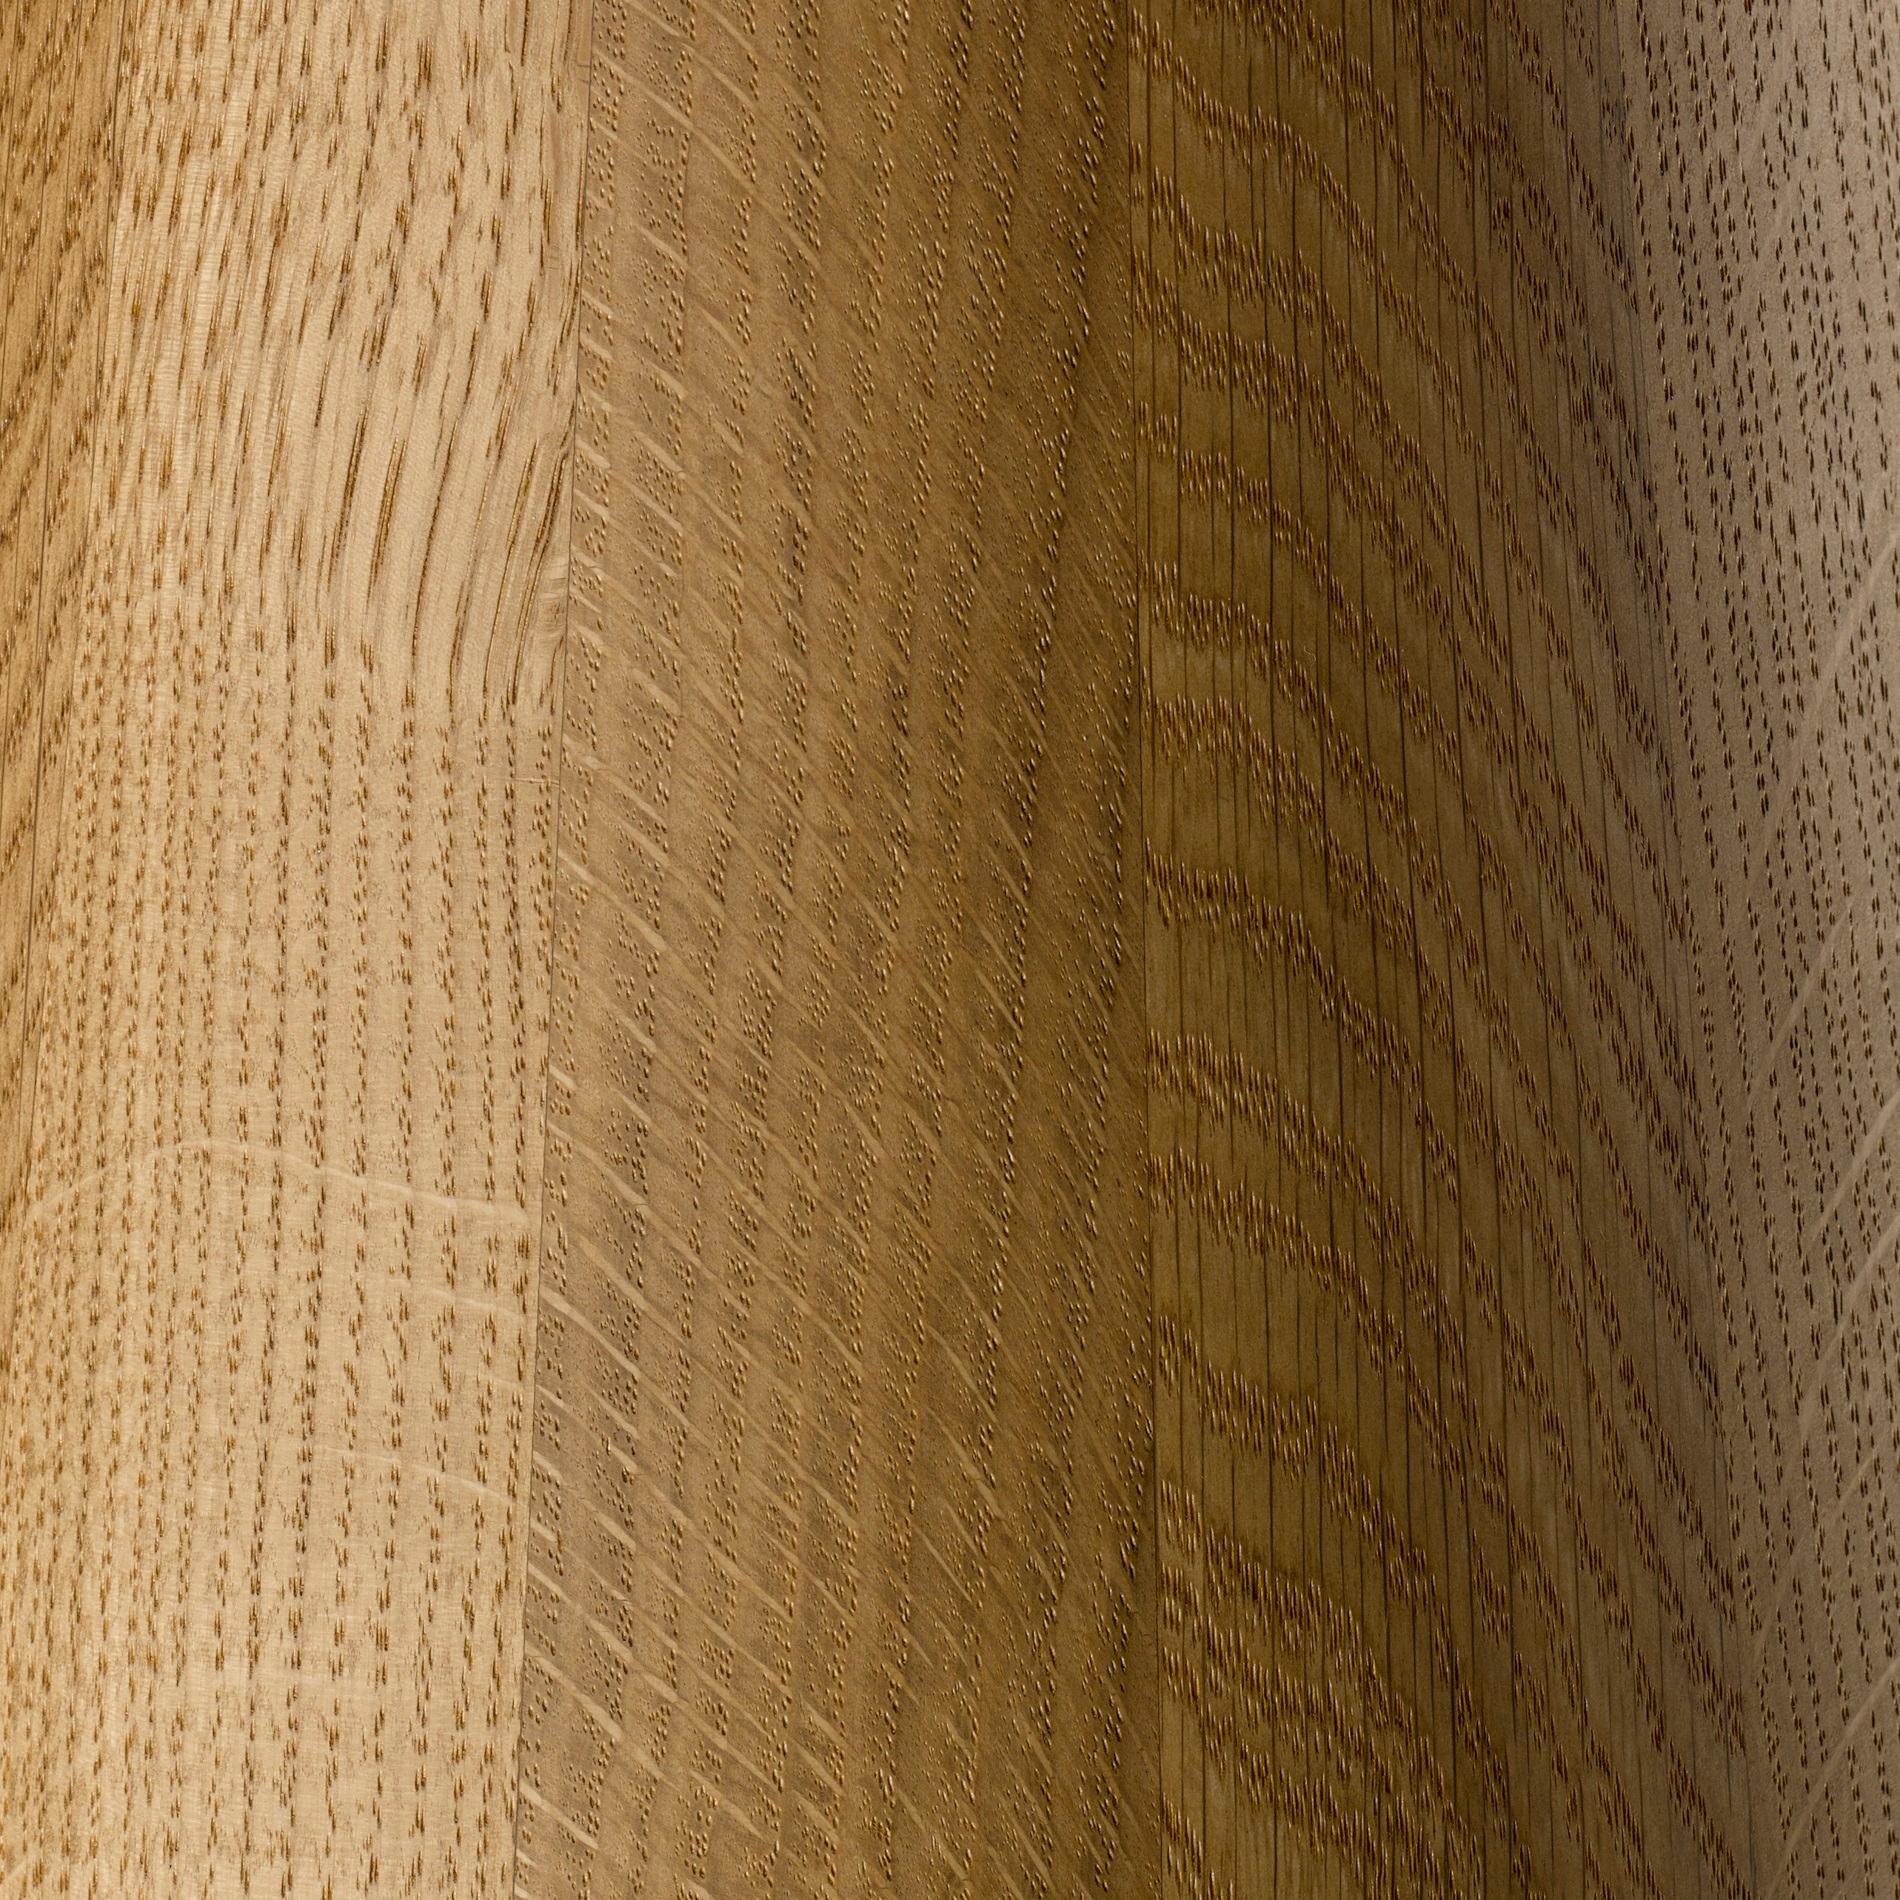 A selection of six of our Stuart Scott Furniture finish samples:
Oiled Oak
Aged Oak
Oiled Walnut
Ebonised Oak
Ebonised Walnut
Black Lacquered Walnut
White Limed Oak
Ebony Limed Oak
Ebony Limed Walnut